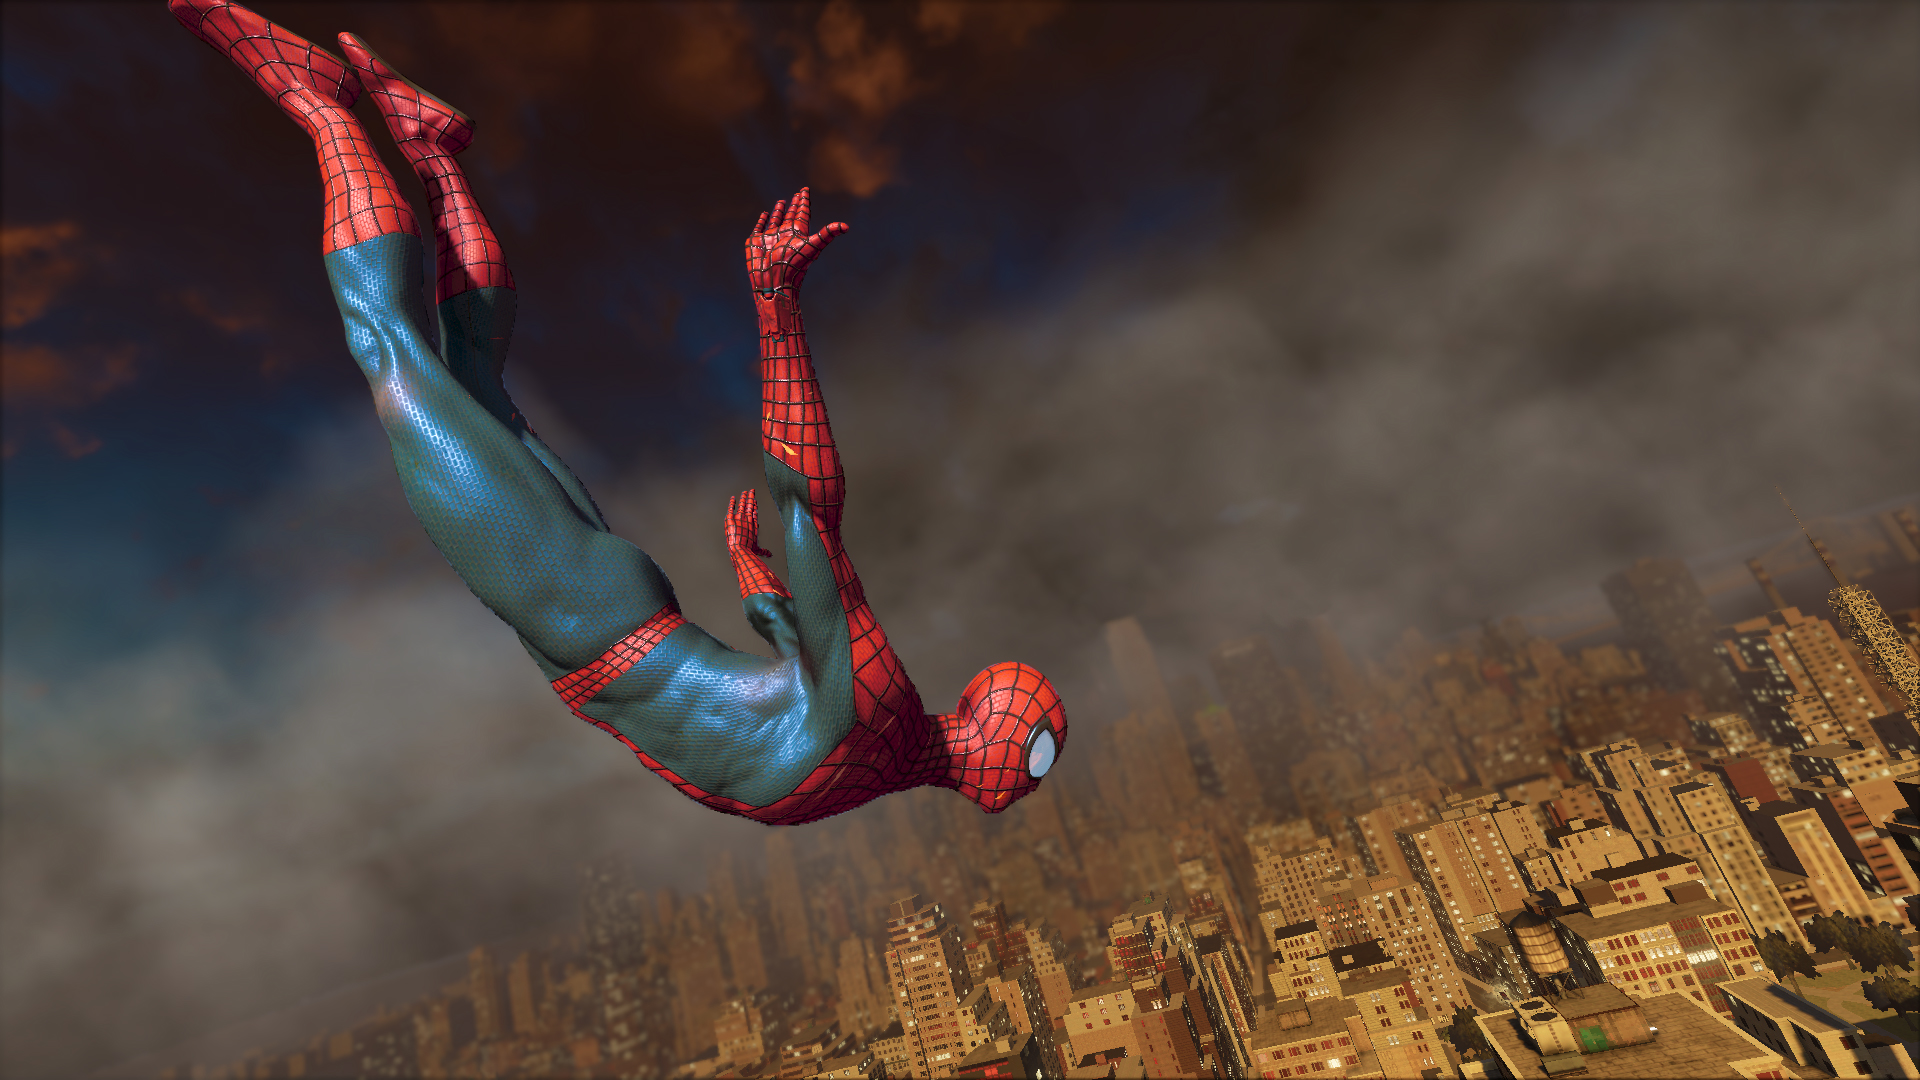 Игра человека паука летать. The amazing Spider-man игра 2014. The amazing Spider-man 2 (игра, 2014). Эмэйзинг Спайдер Мэн 2. Spider man 2014 игра.